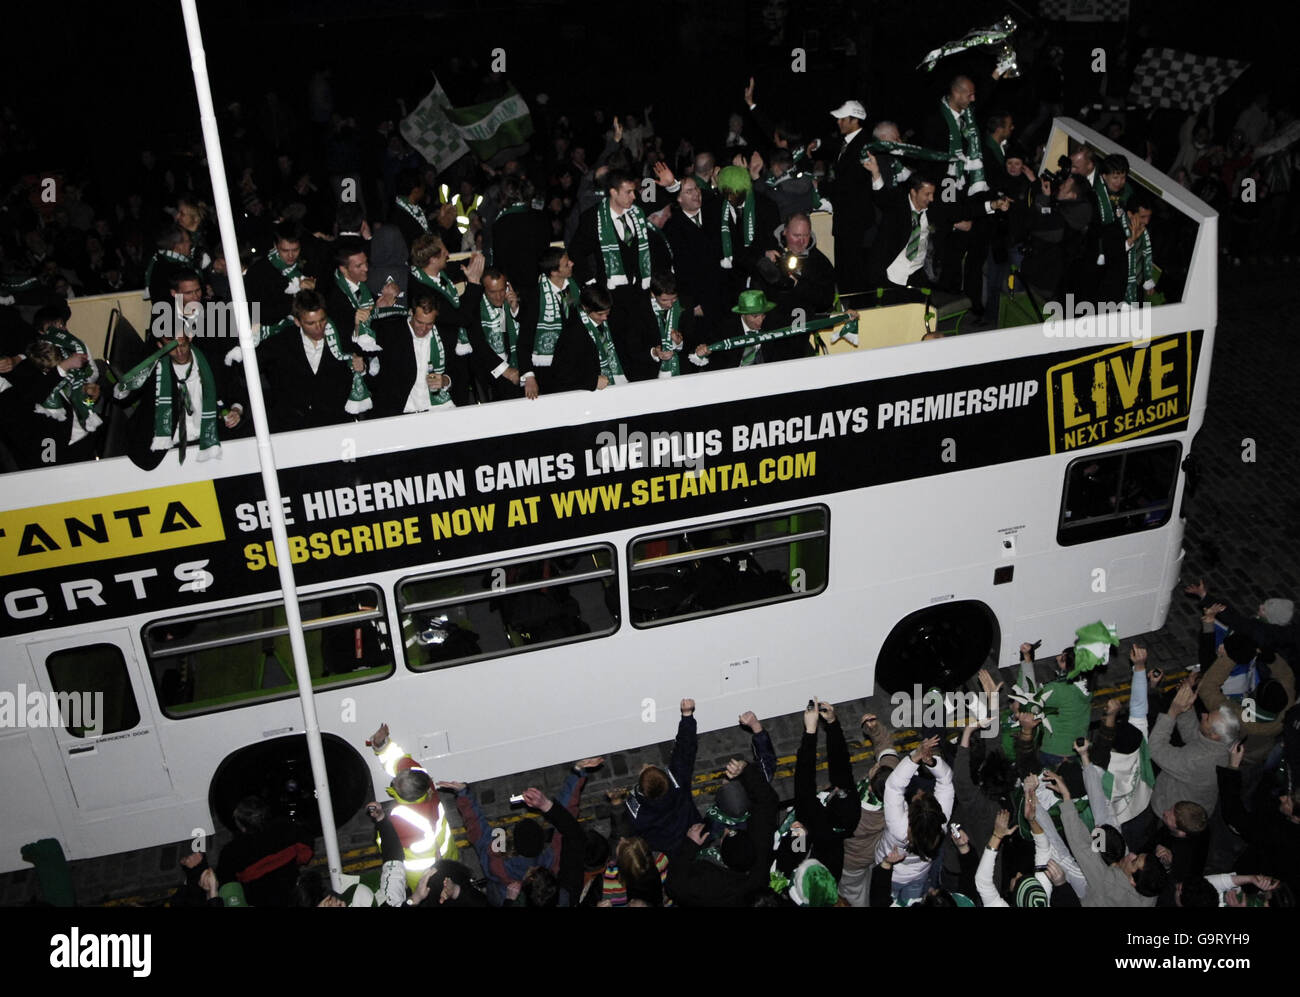 Soccer - CIS Insurance Cup Final - Hibernian bus Stock Photo